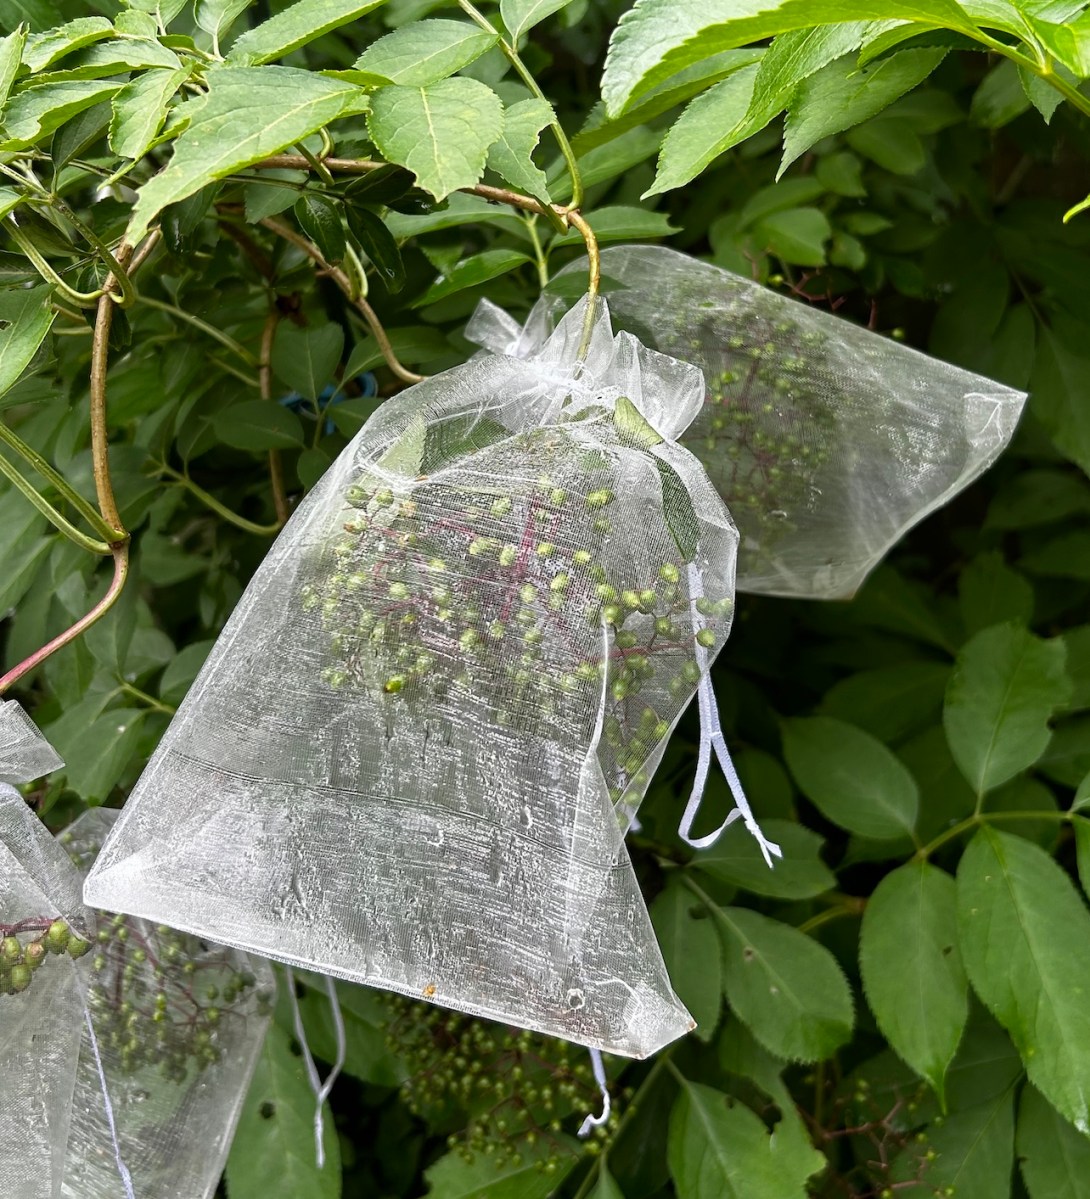 Small organza drawstring bags cover ripening elderberries on a bush.